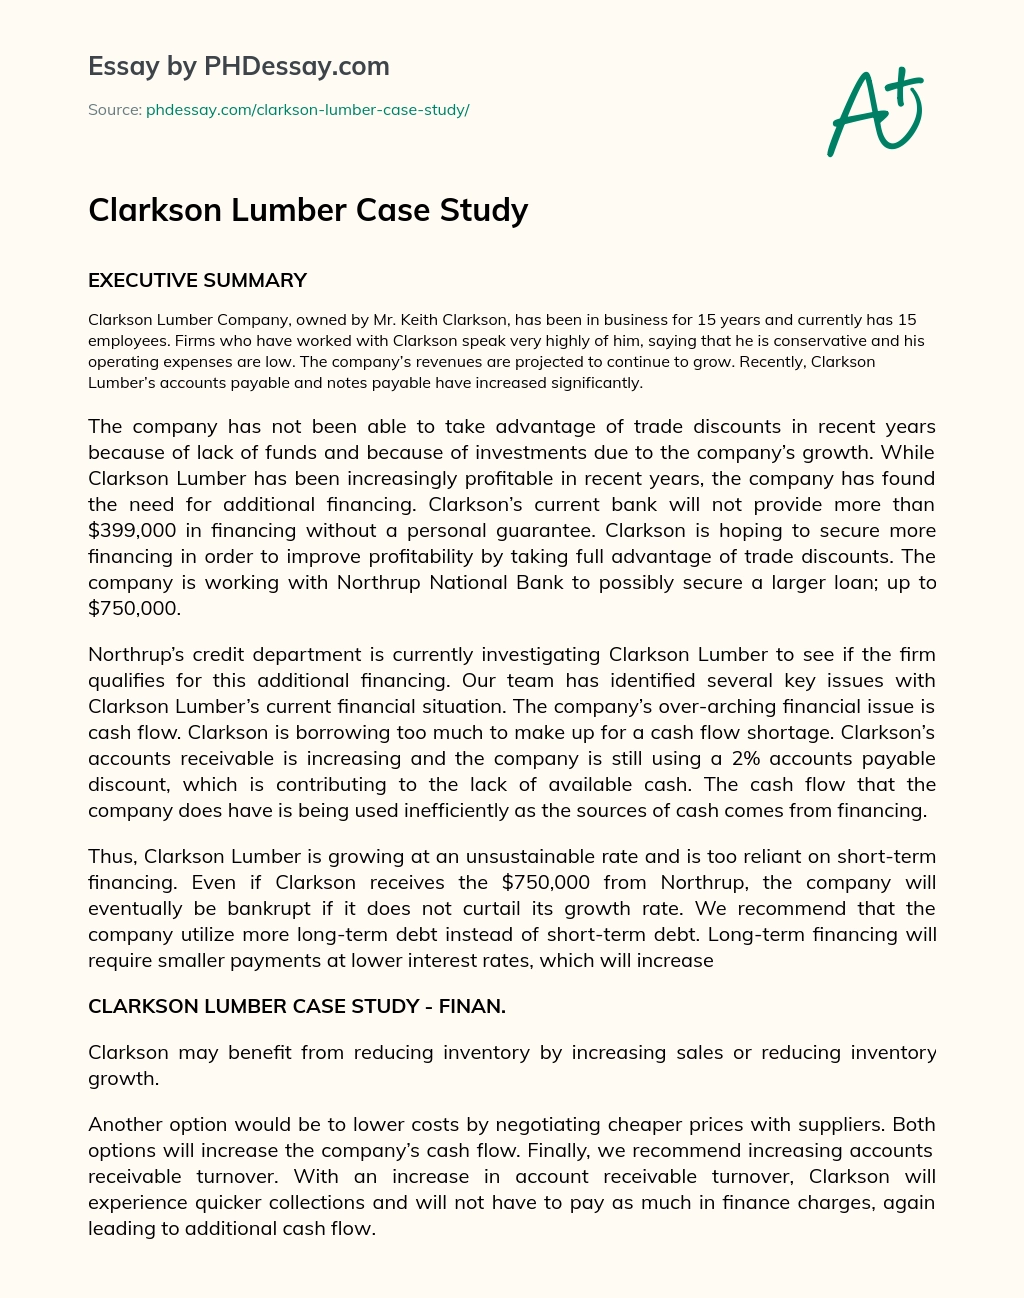 Clarkson Lumber Case Study essay